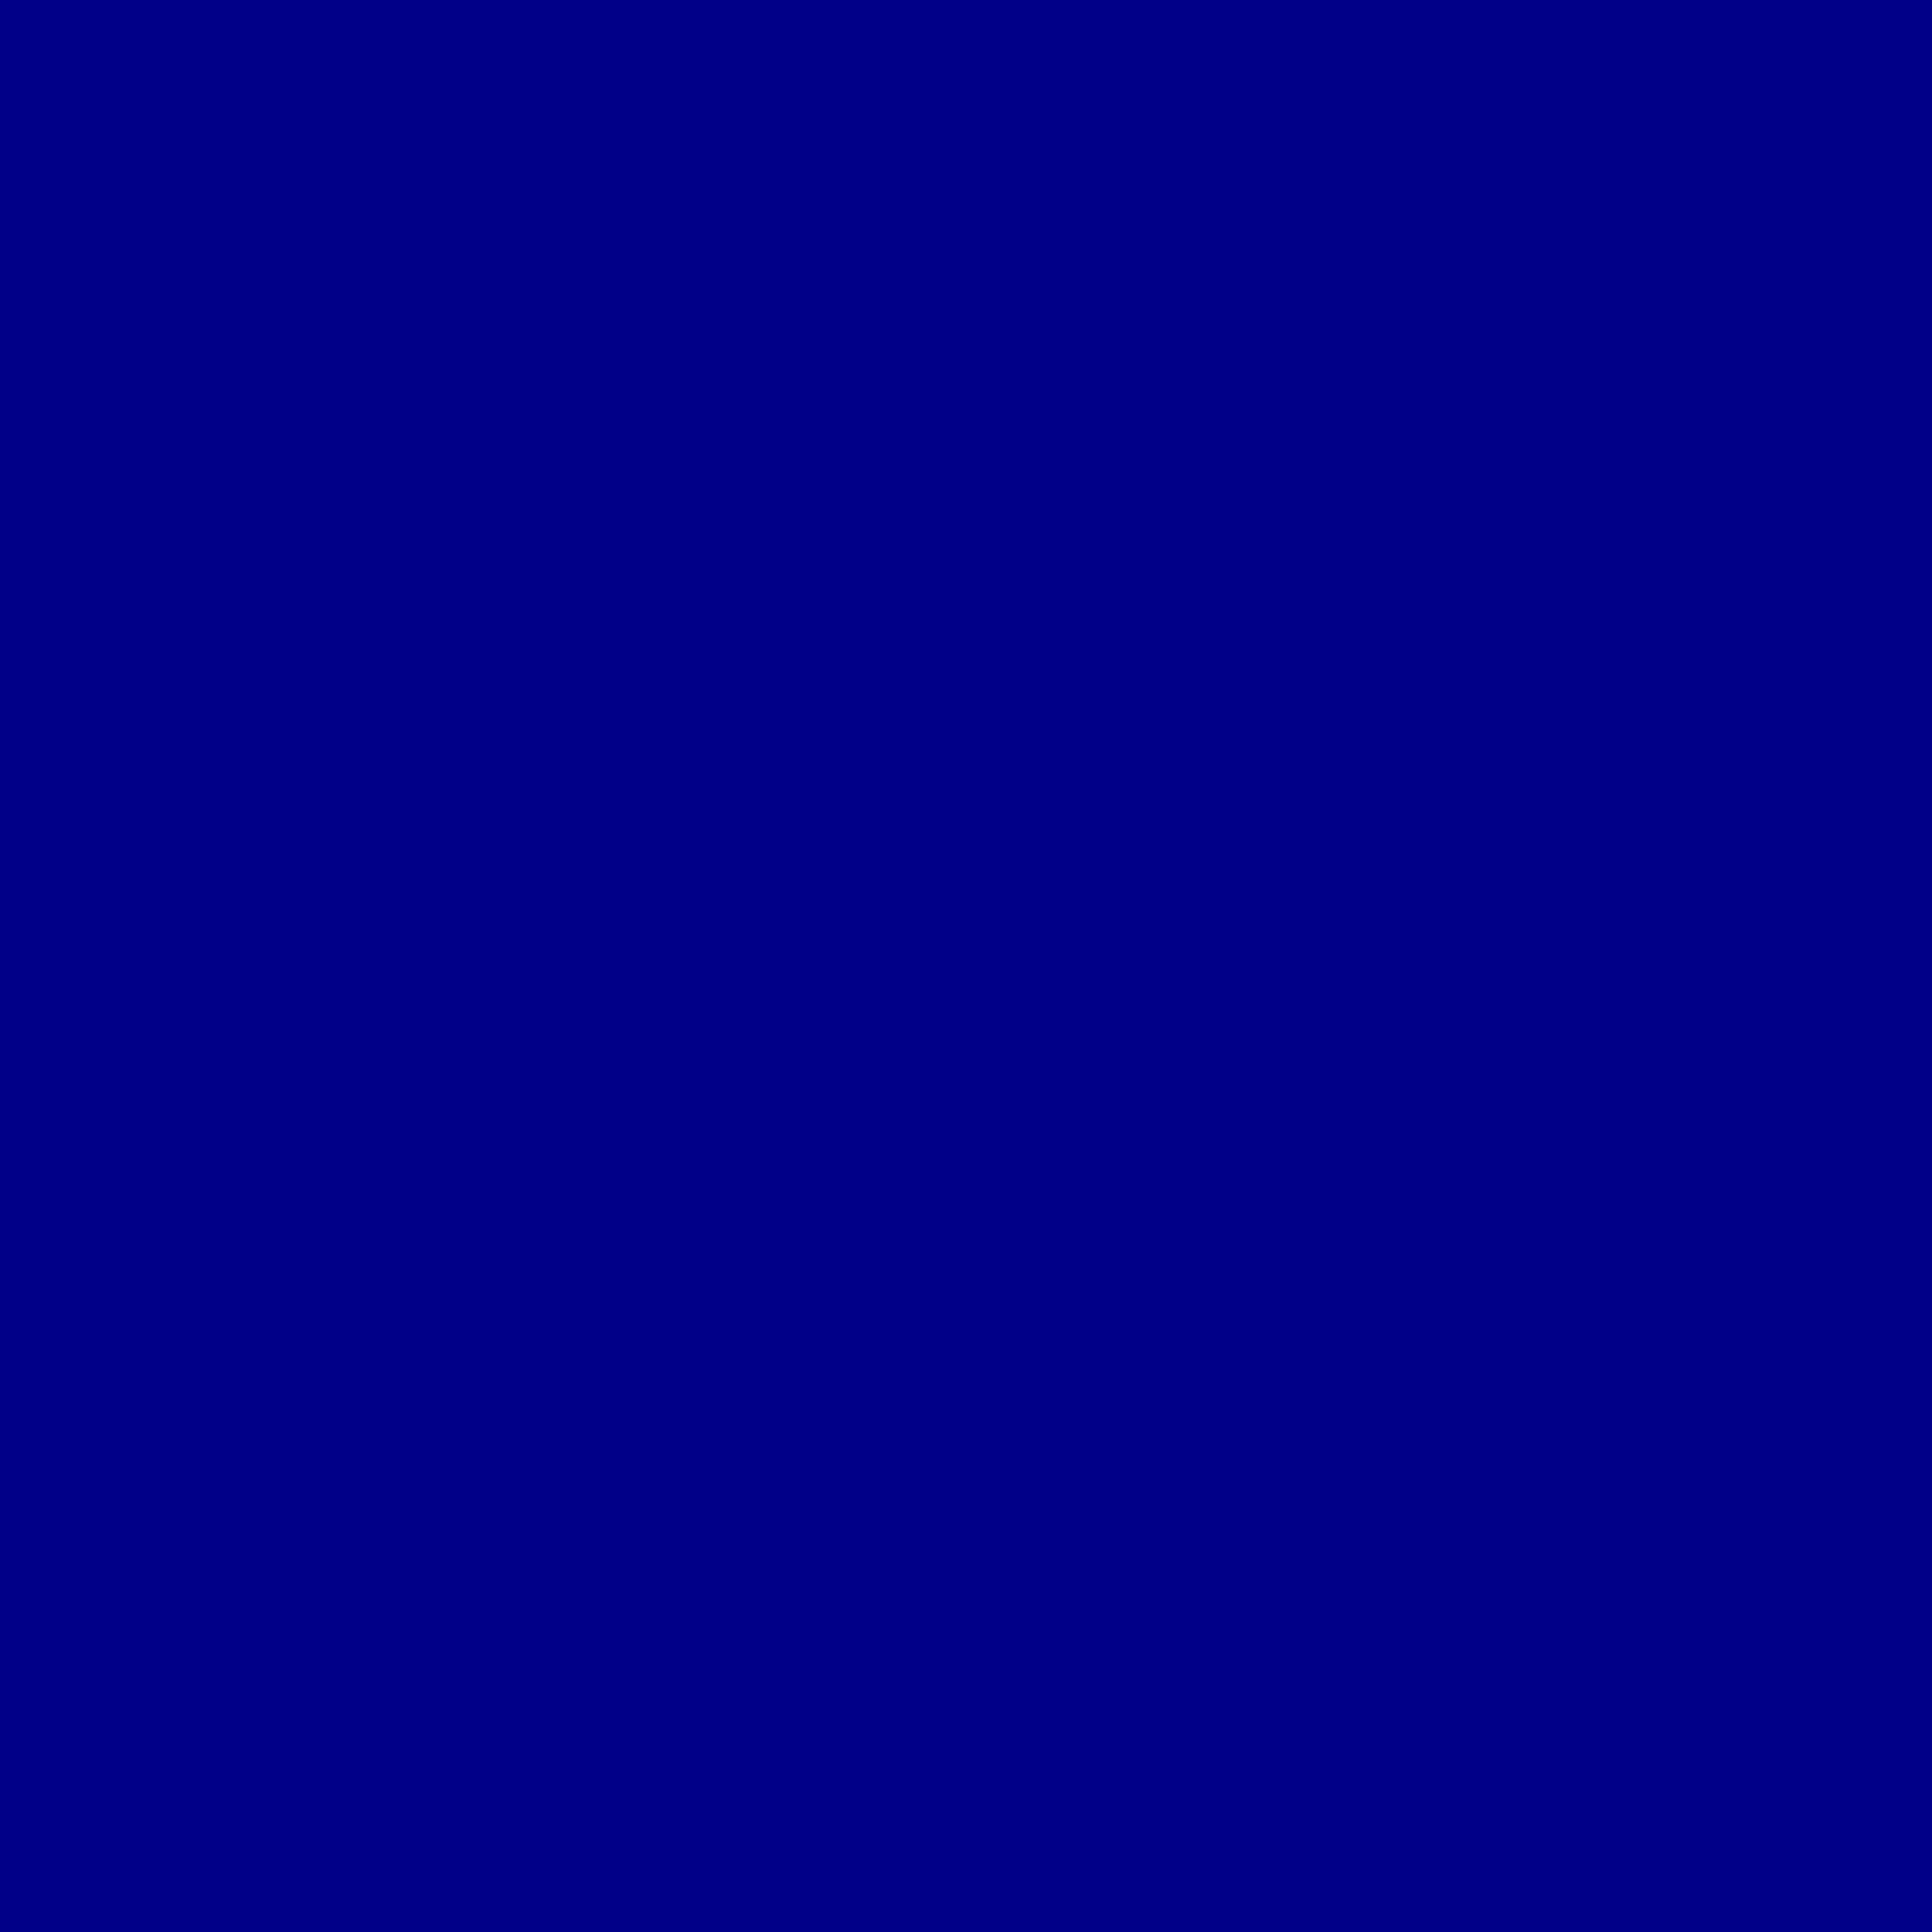 2732x2732 Dark Blue Solid Color Background